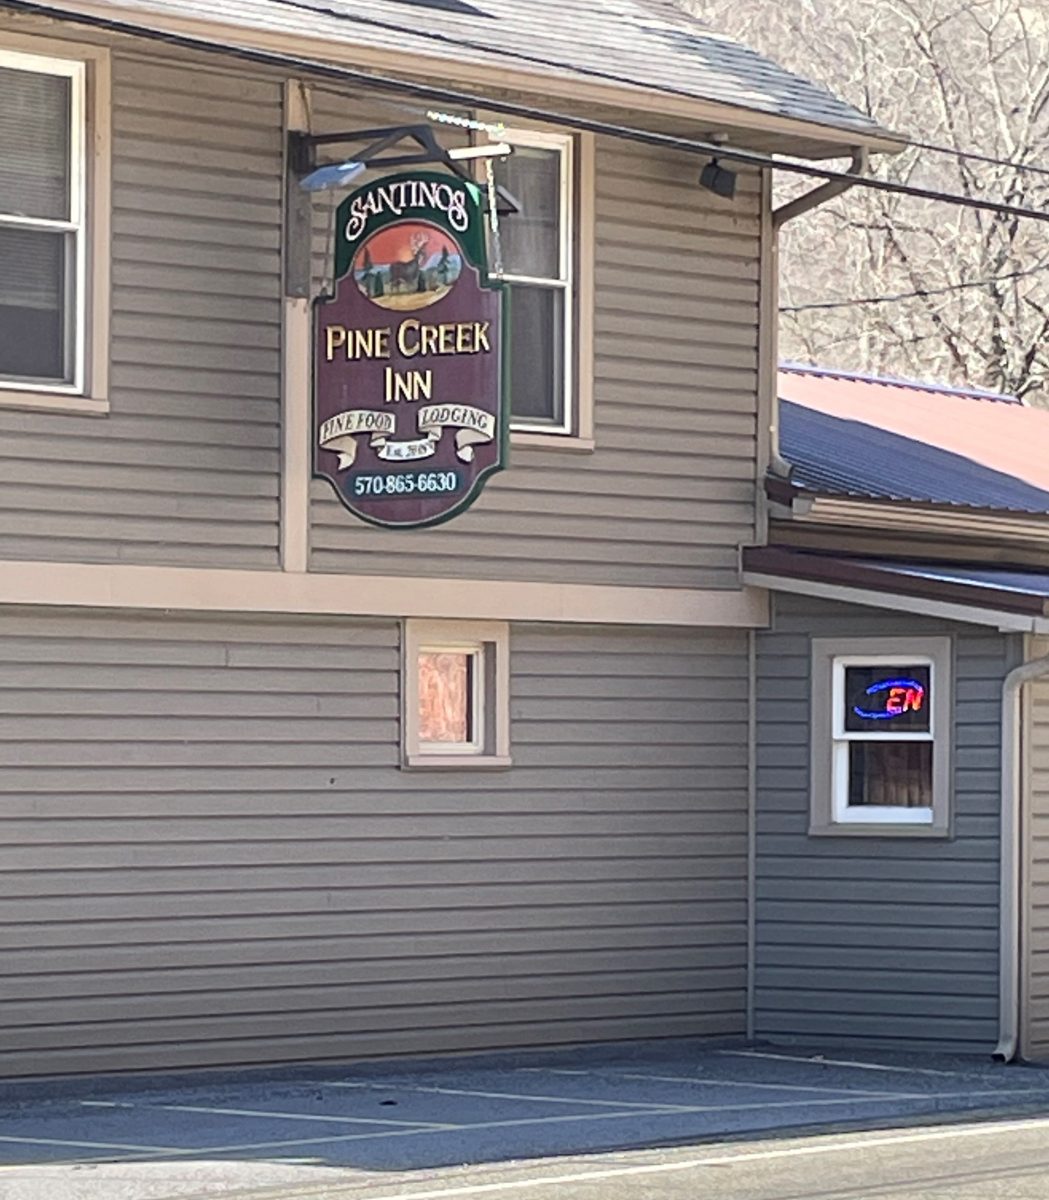 Santino's Pine Creek Inn - Lycoming County Visitors Bureau